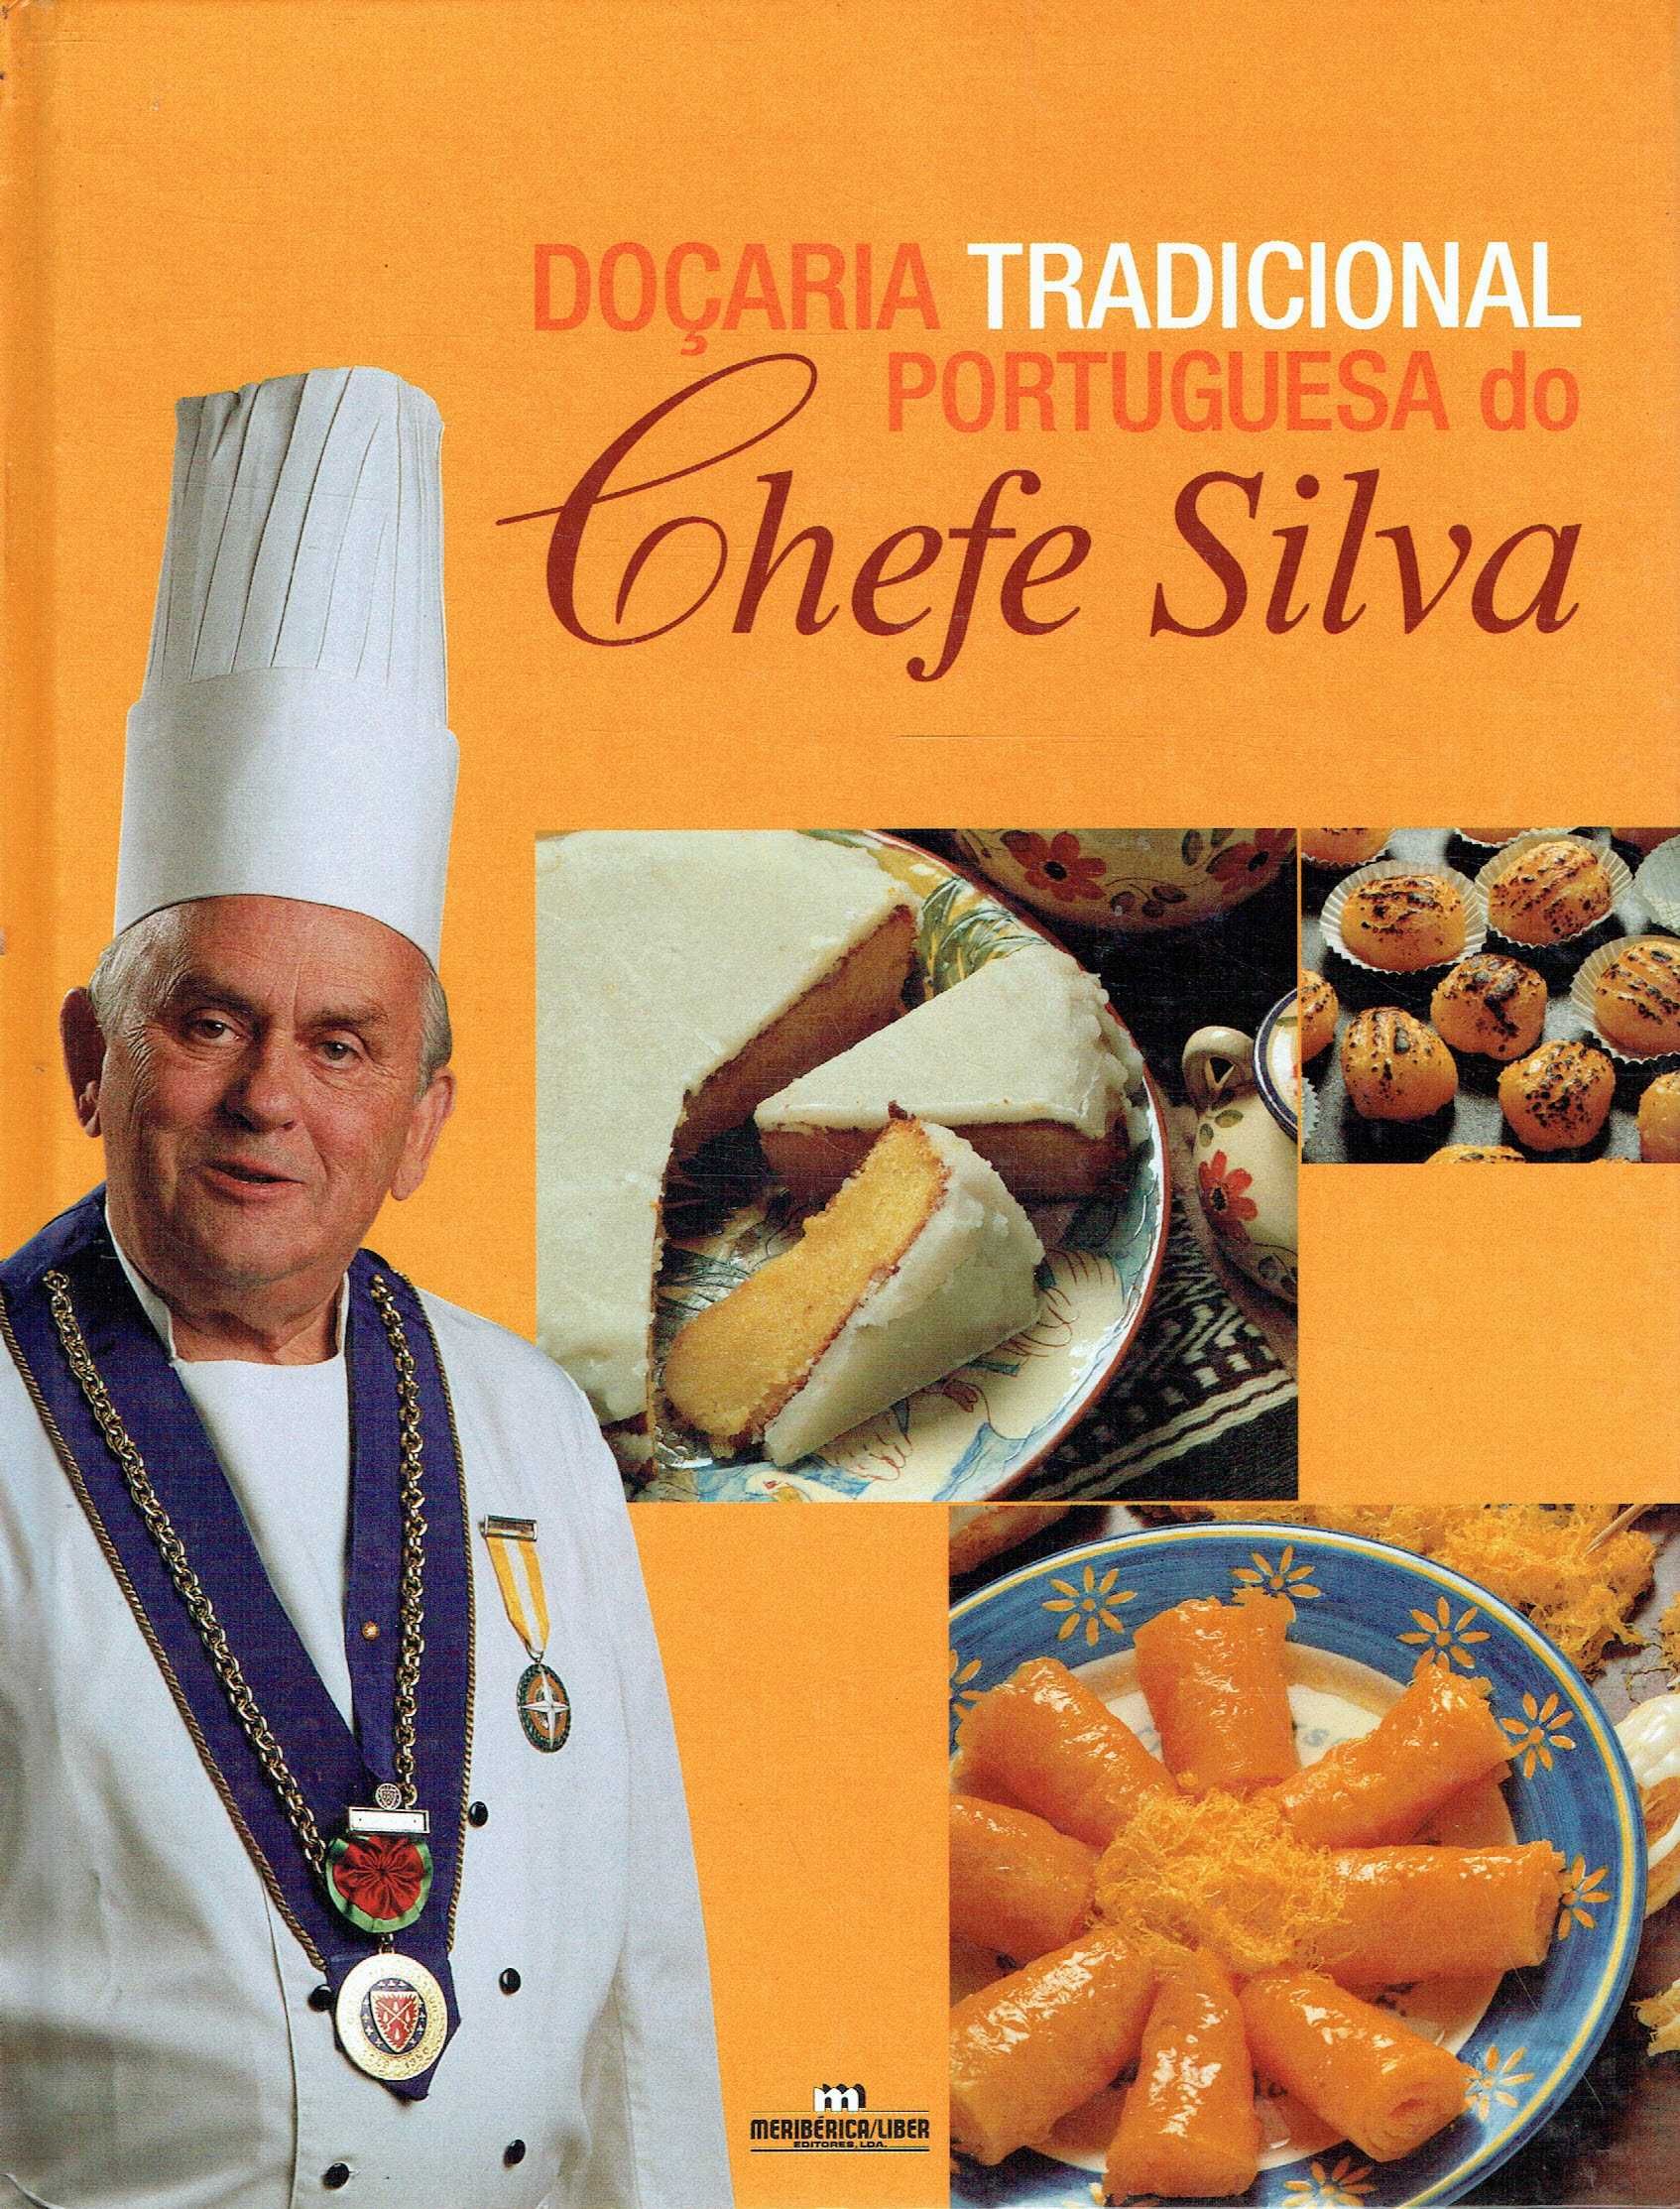 7465

Doçaria tradicional portuguesa do chef Silva